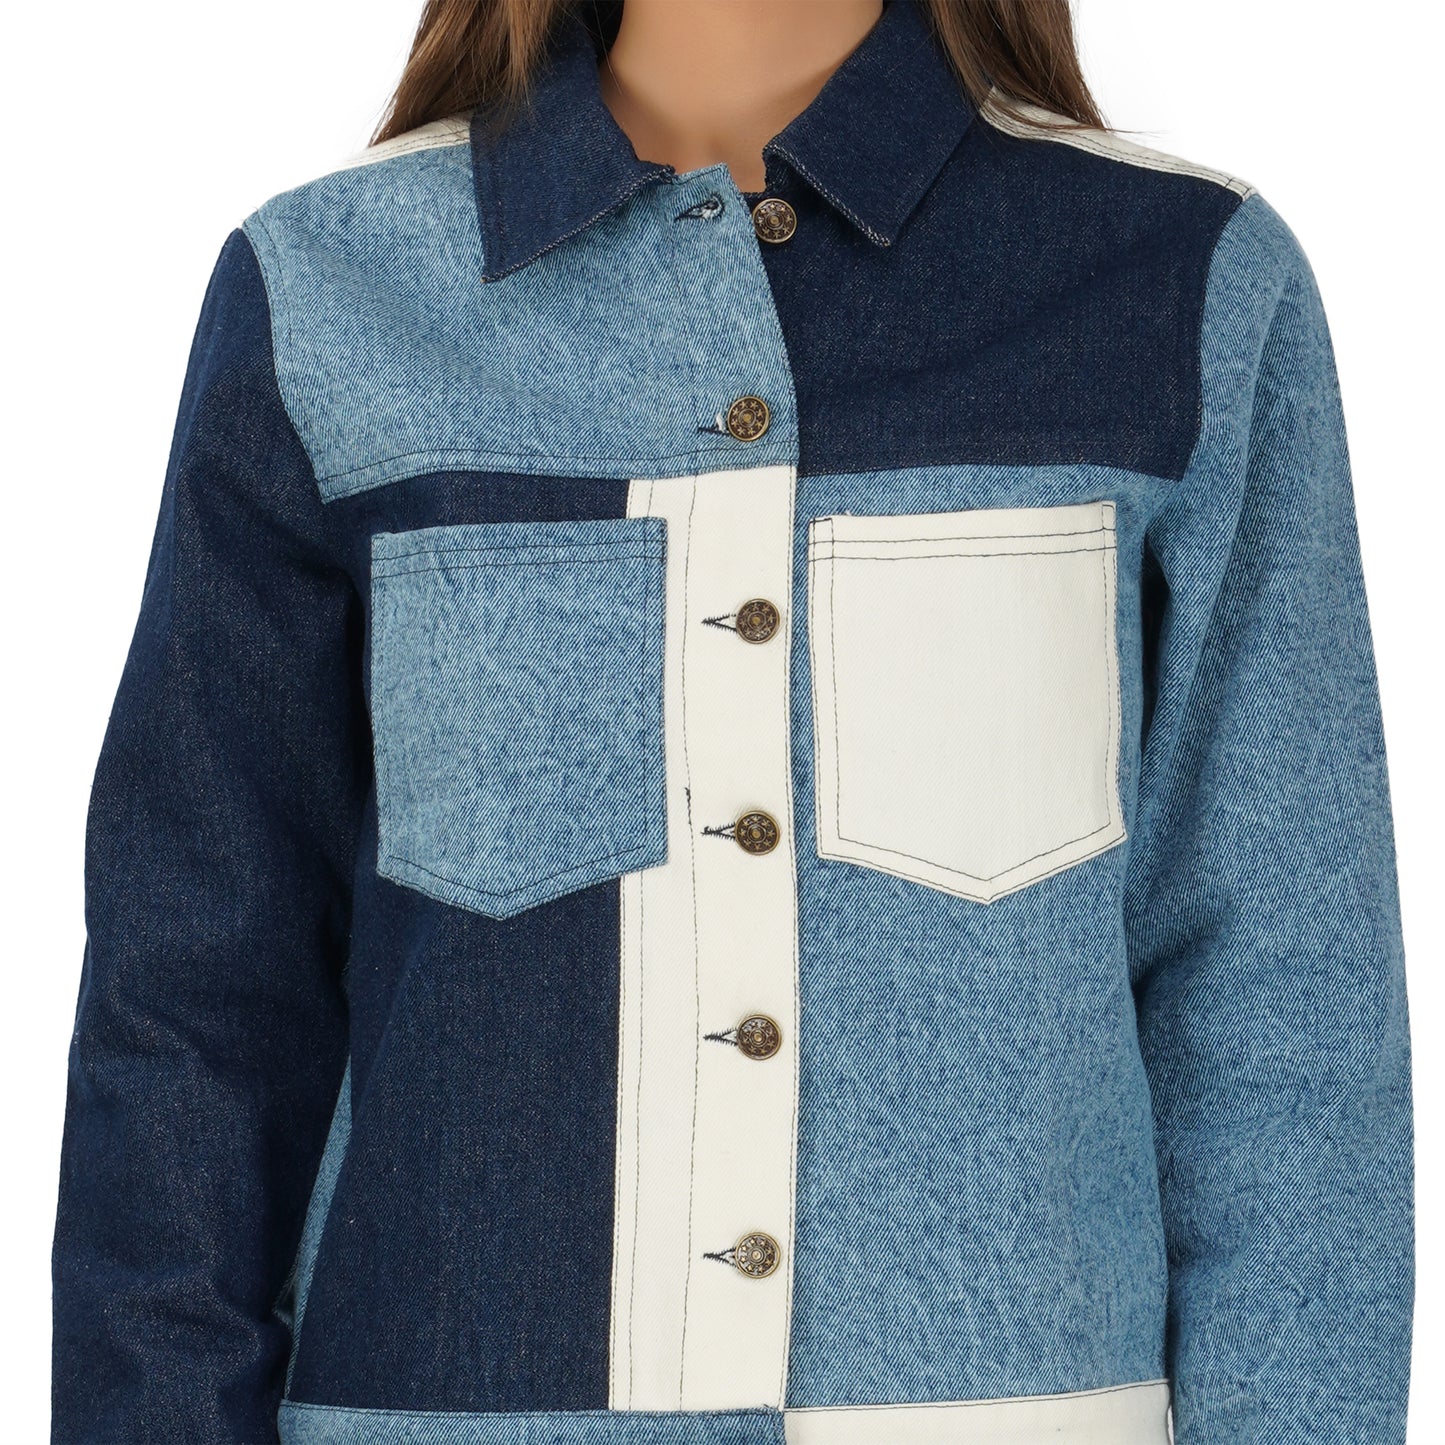 SLAY. Women's Blue & White Colorblock Denim Jacket & Jeans Co-ord Set